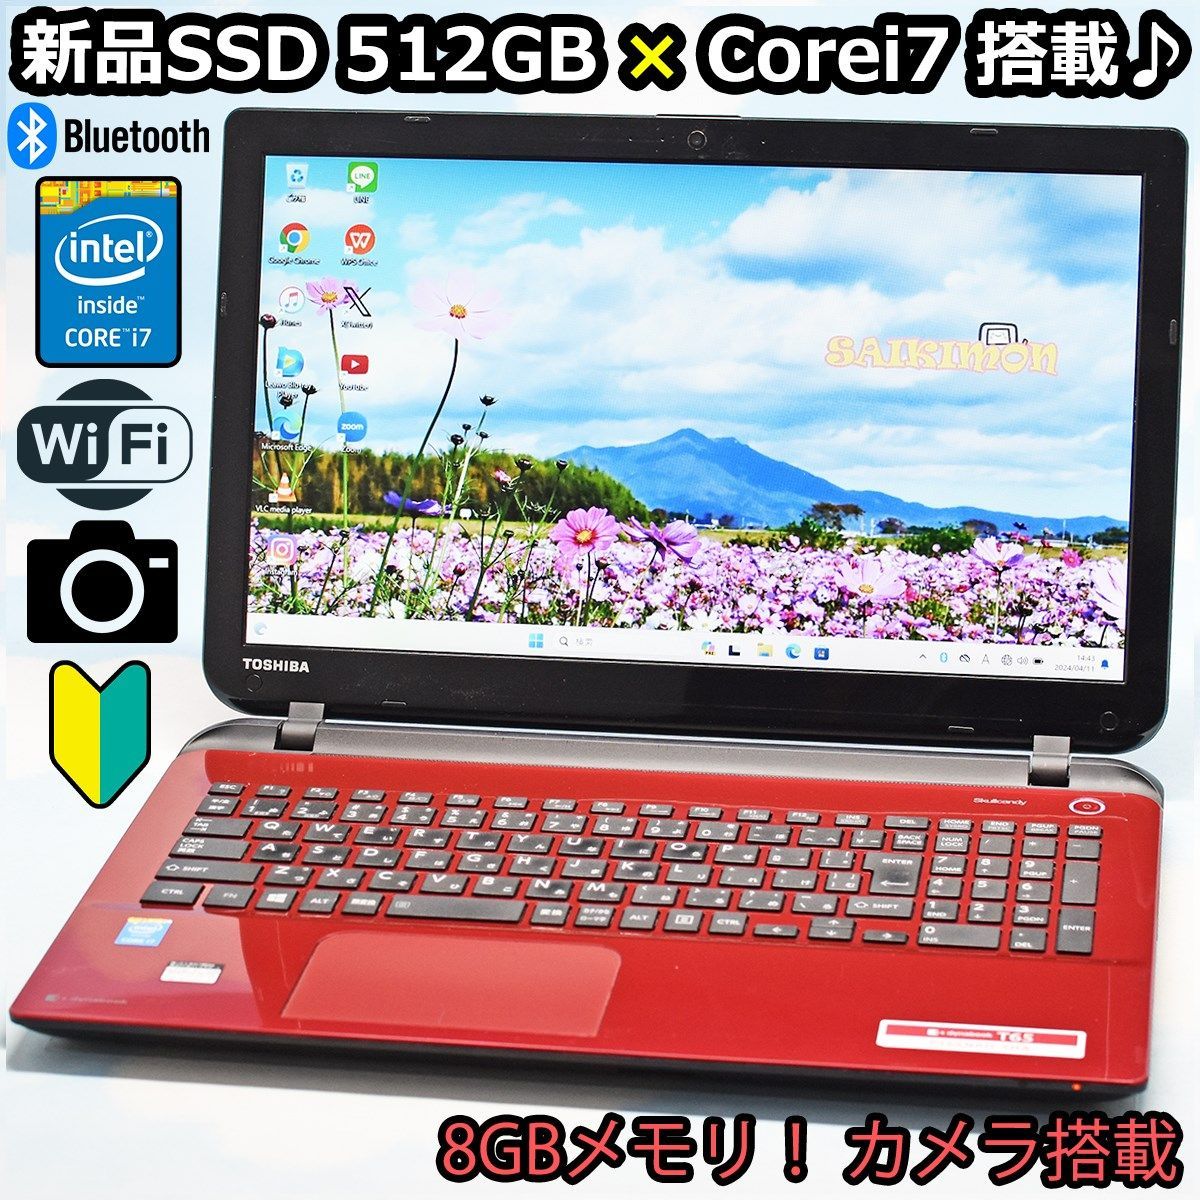 Corei7、新品512GB SSD、8GBメモリ、Bluetooth、カメラ、マイク、WiFi 